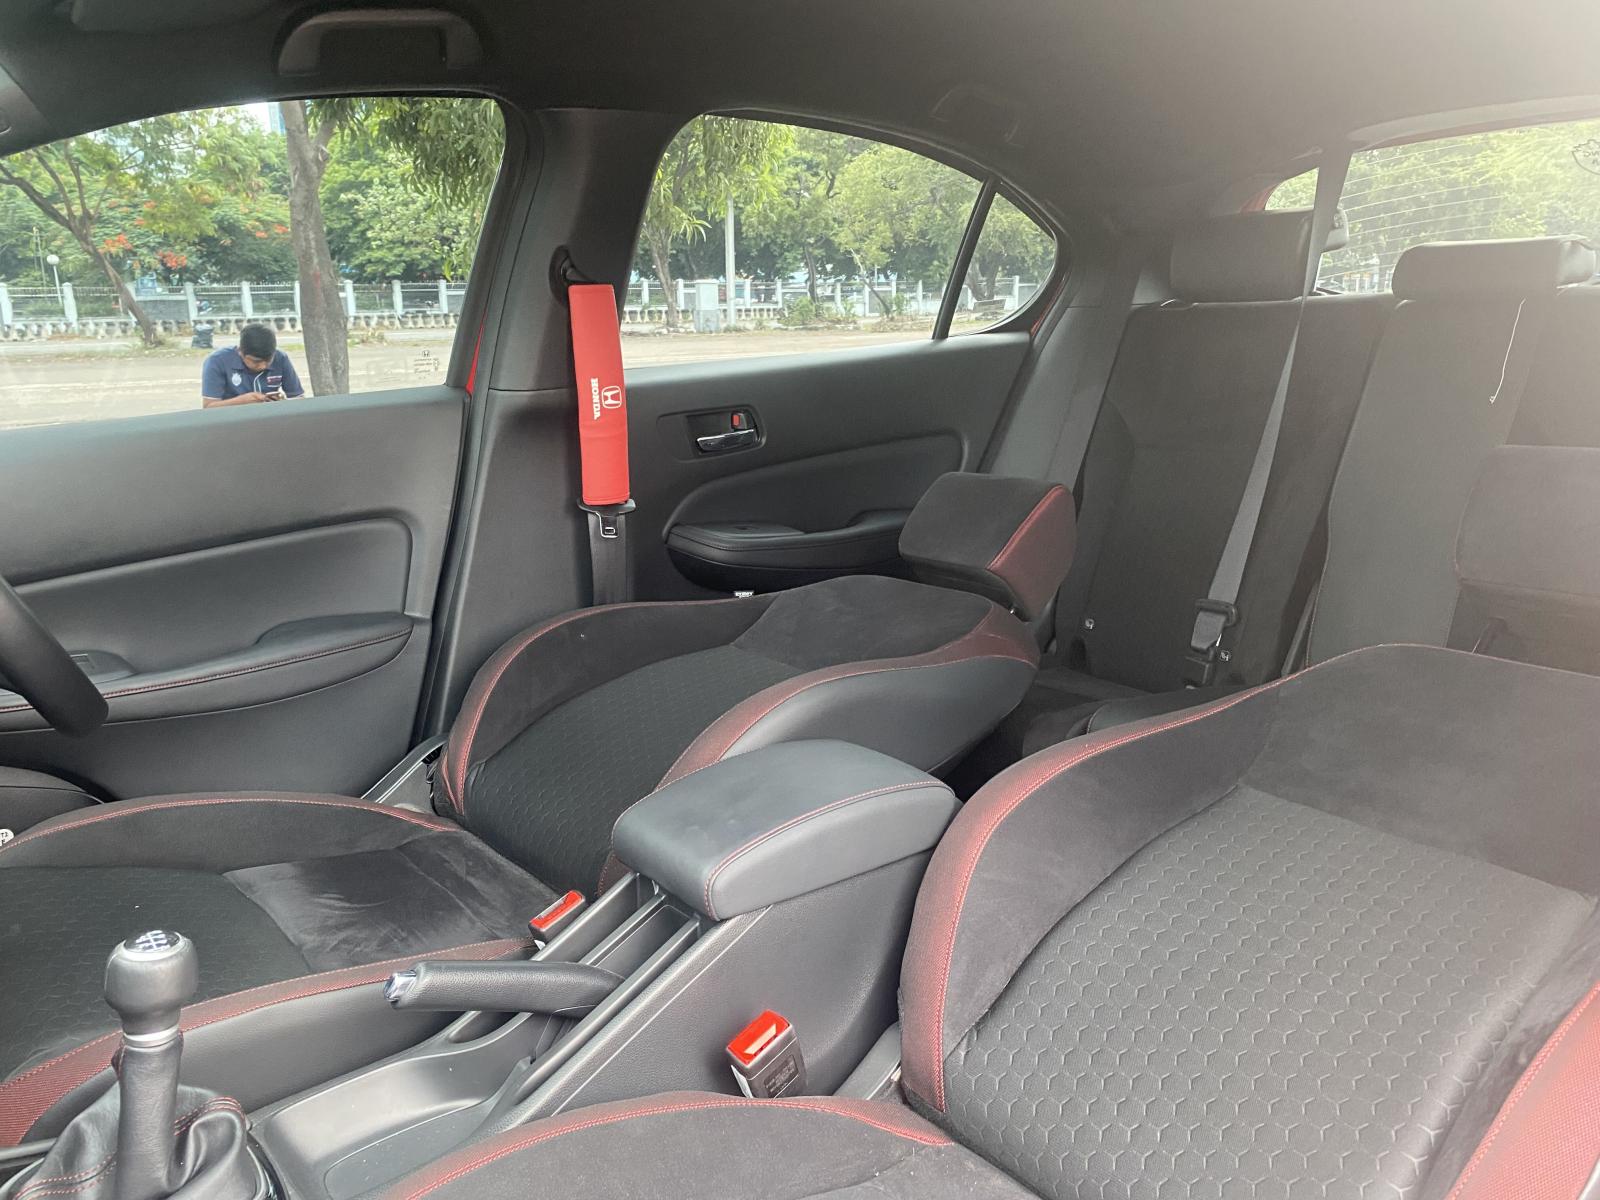 Honda City Hatchback RS MT 2021 Merah